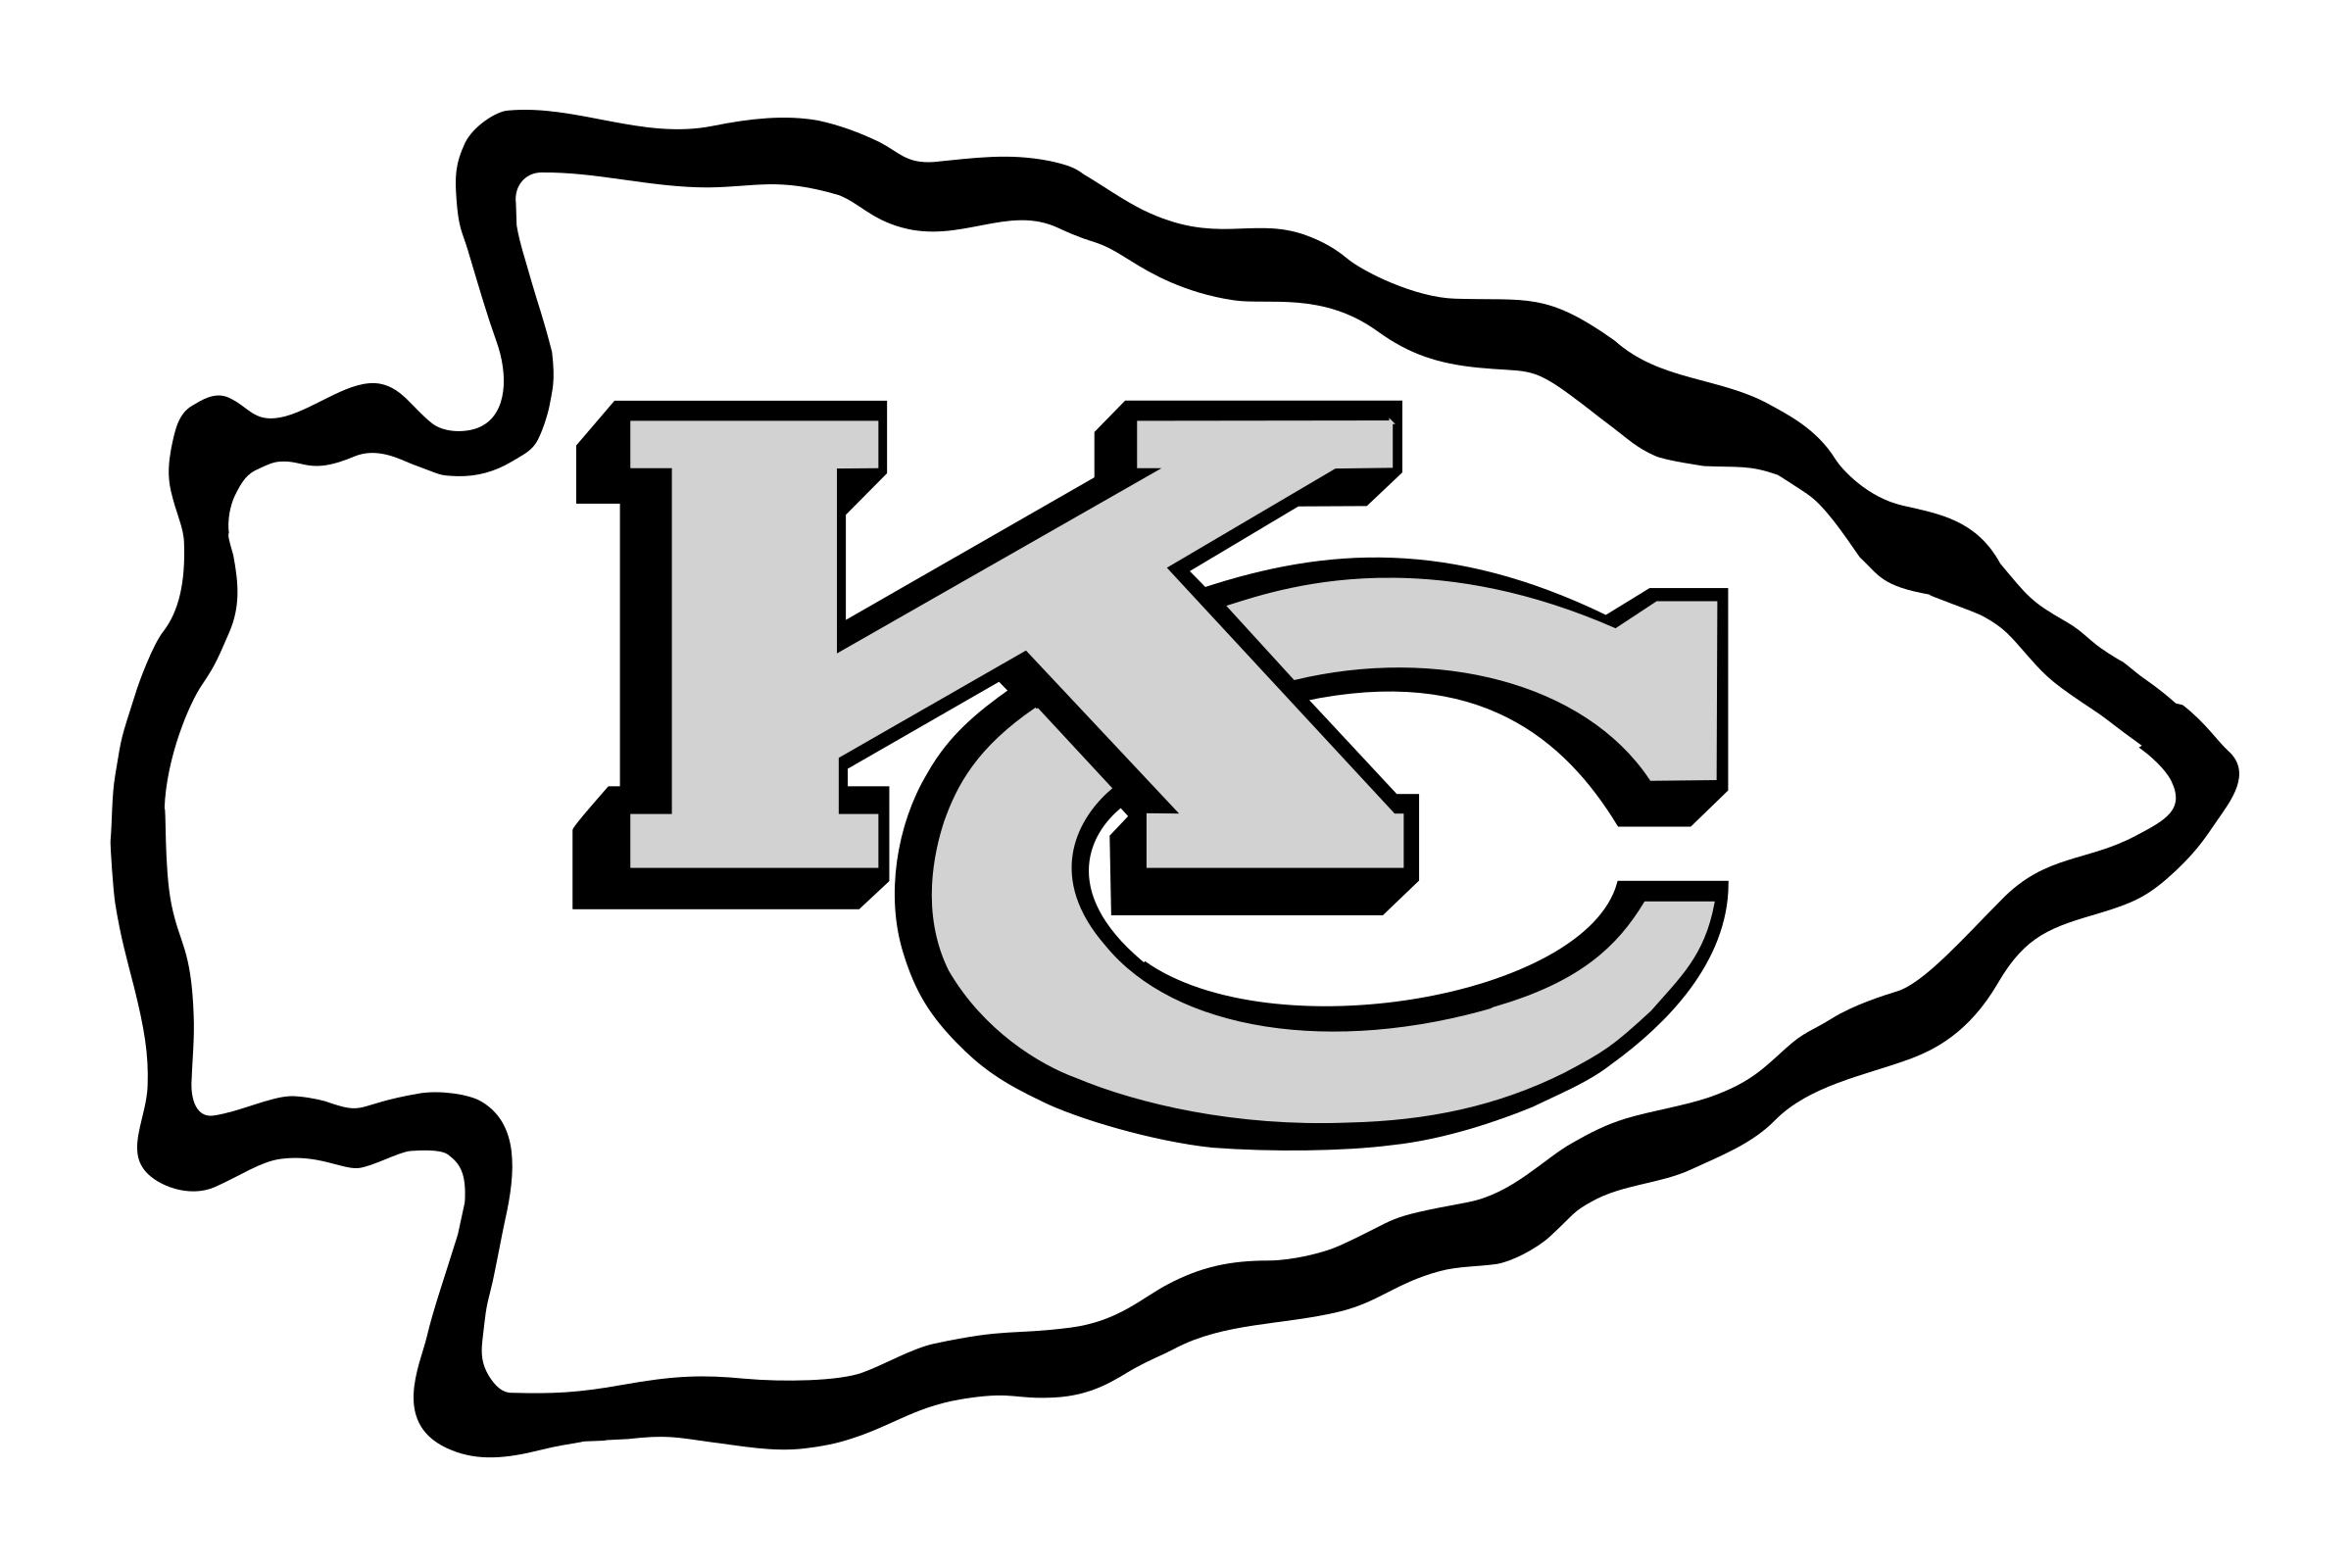 kansas_city_chiefs_logo